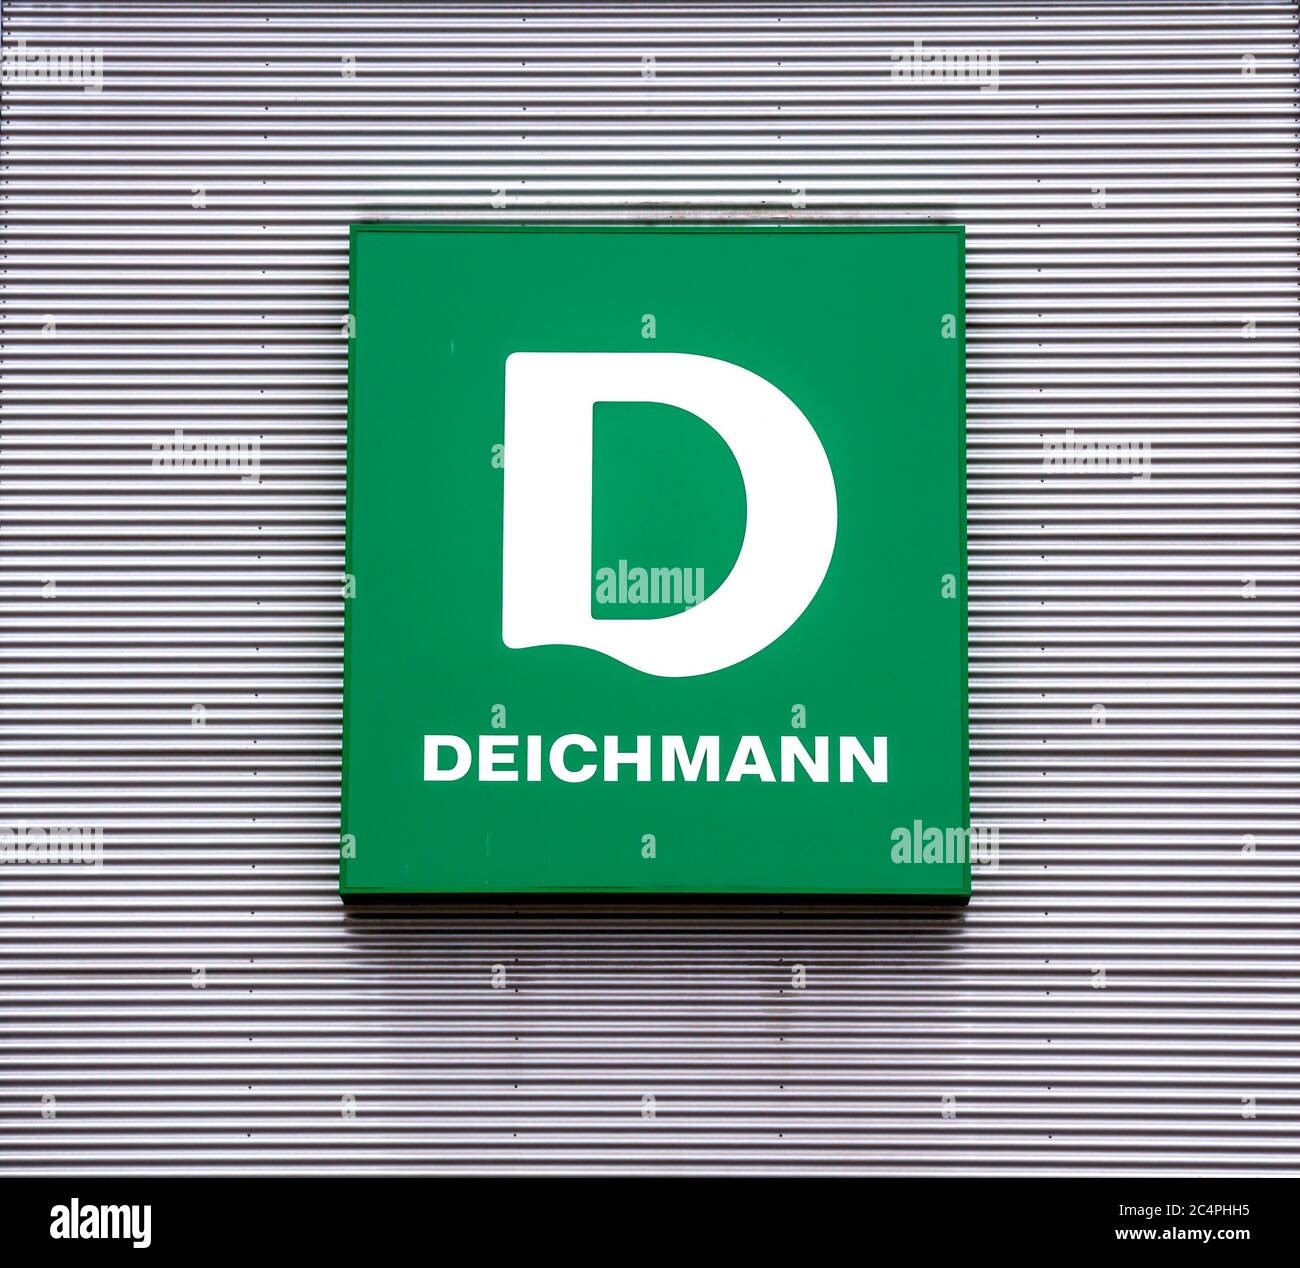 Deichmann Logo High Stock Photography and -